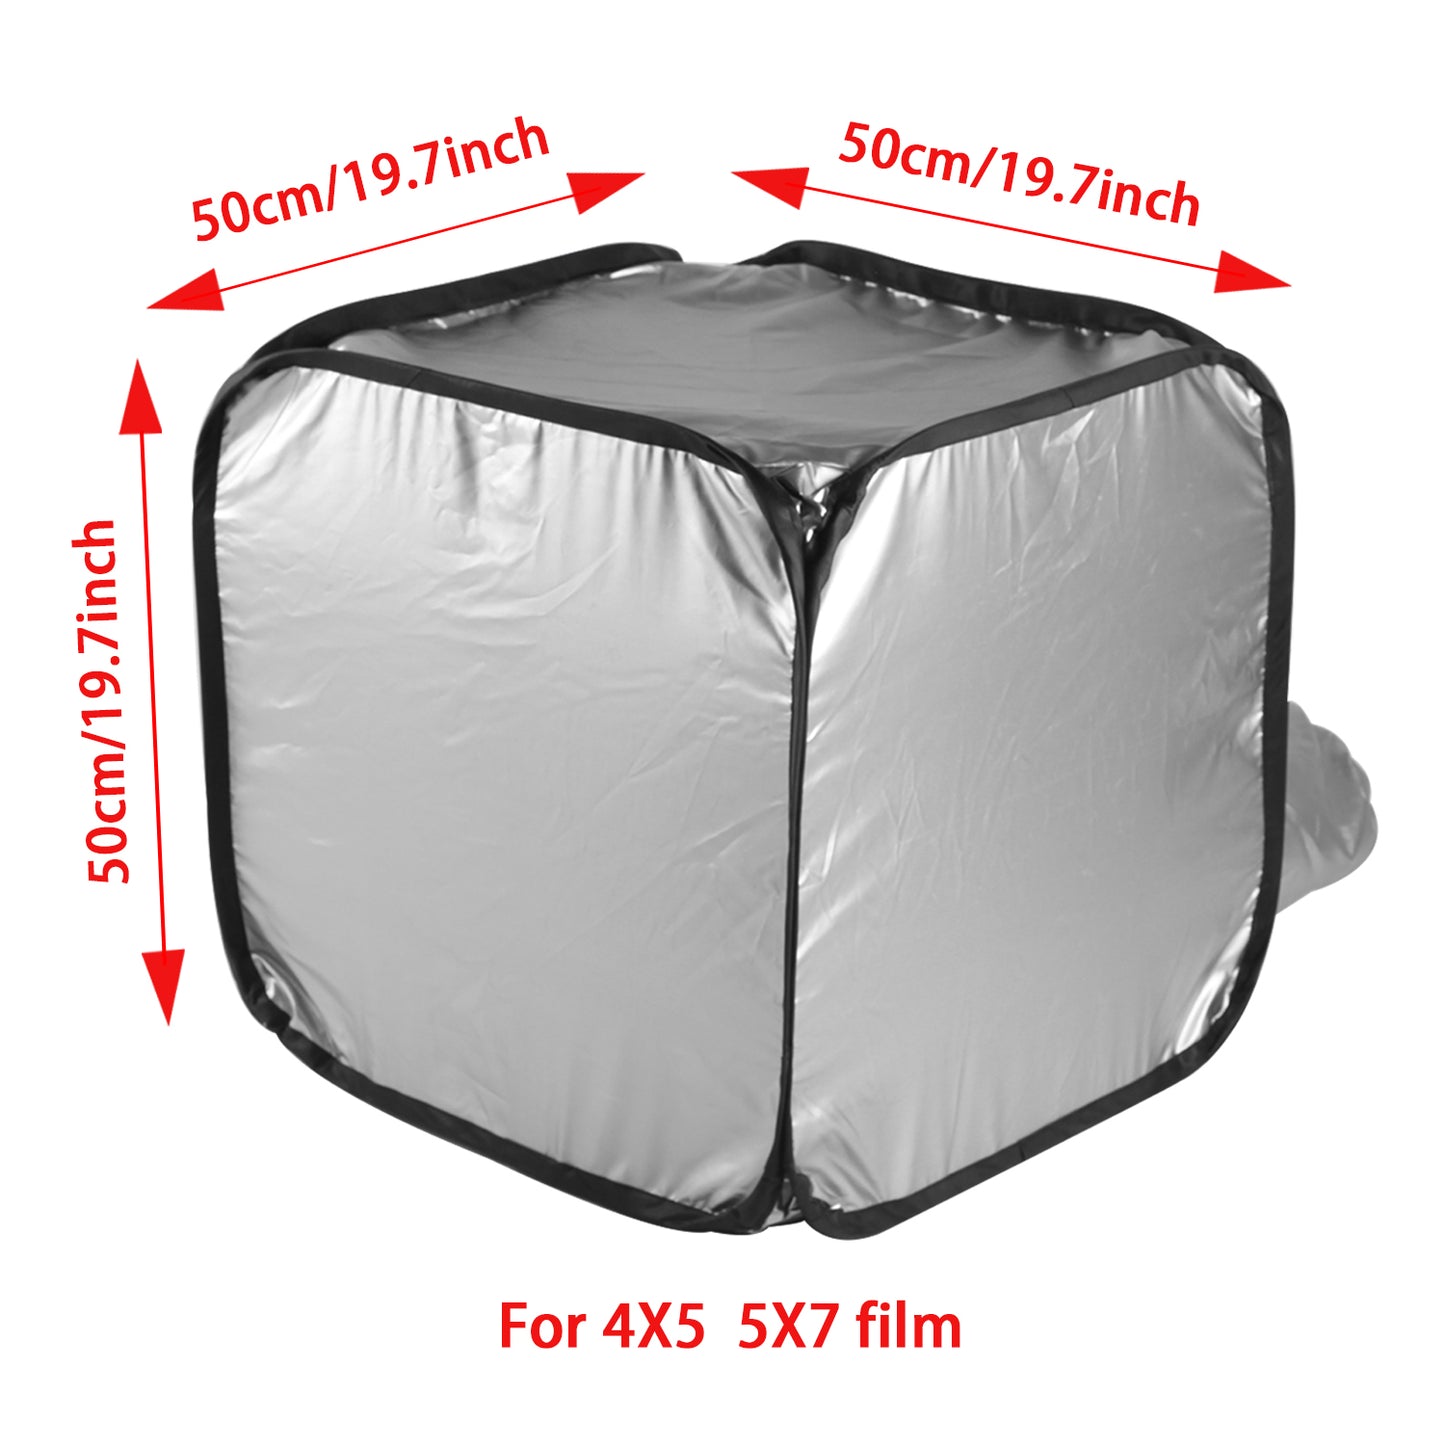 Darkroom Large Format Film Changing Film Loading Tent Bag for 4x5 5x7 Camera Negative Developing